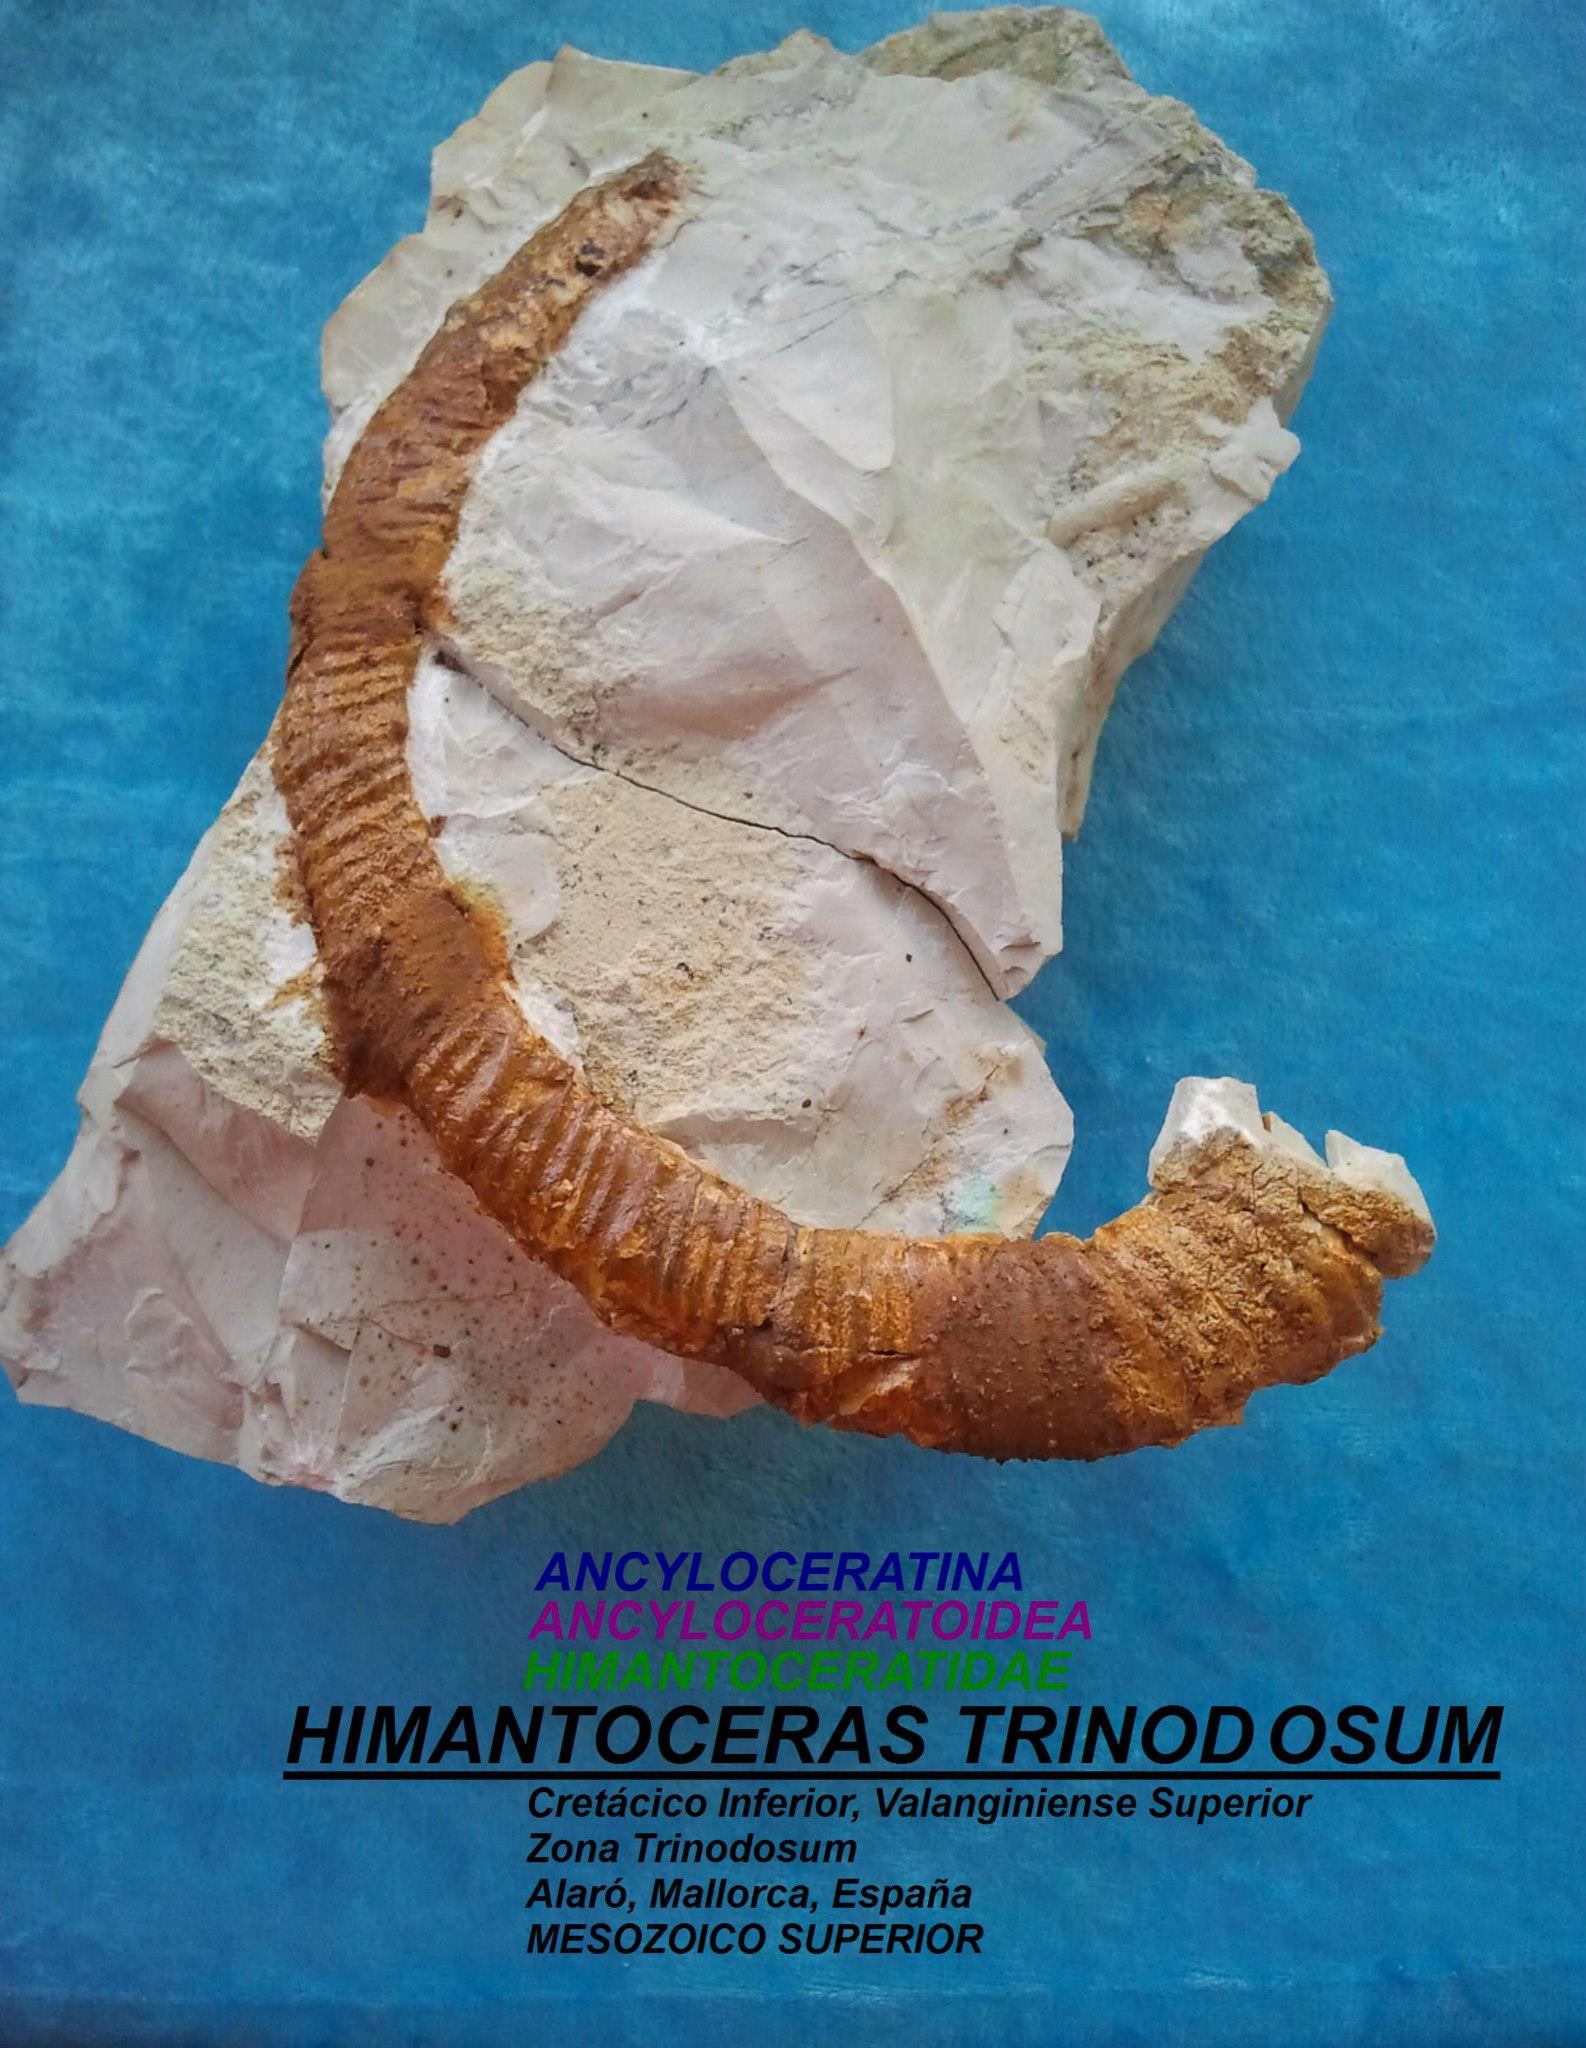 HIMANTOCERAS TRINODOSUM